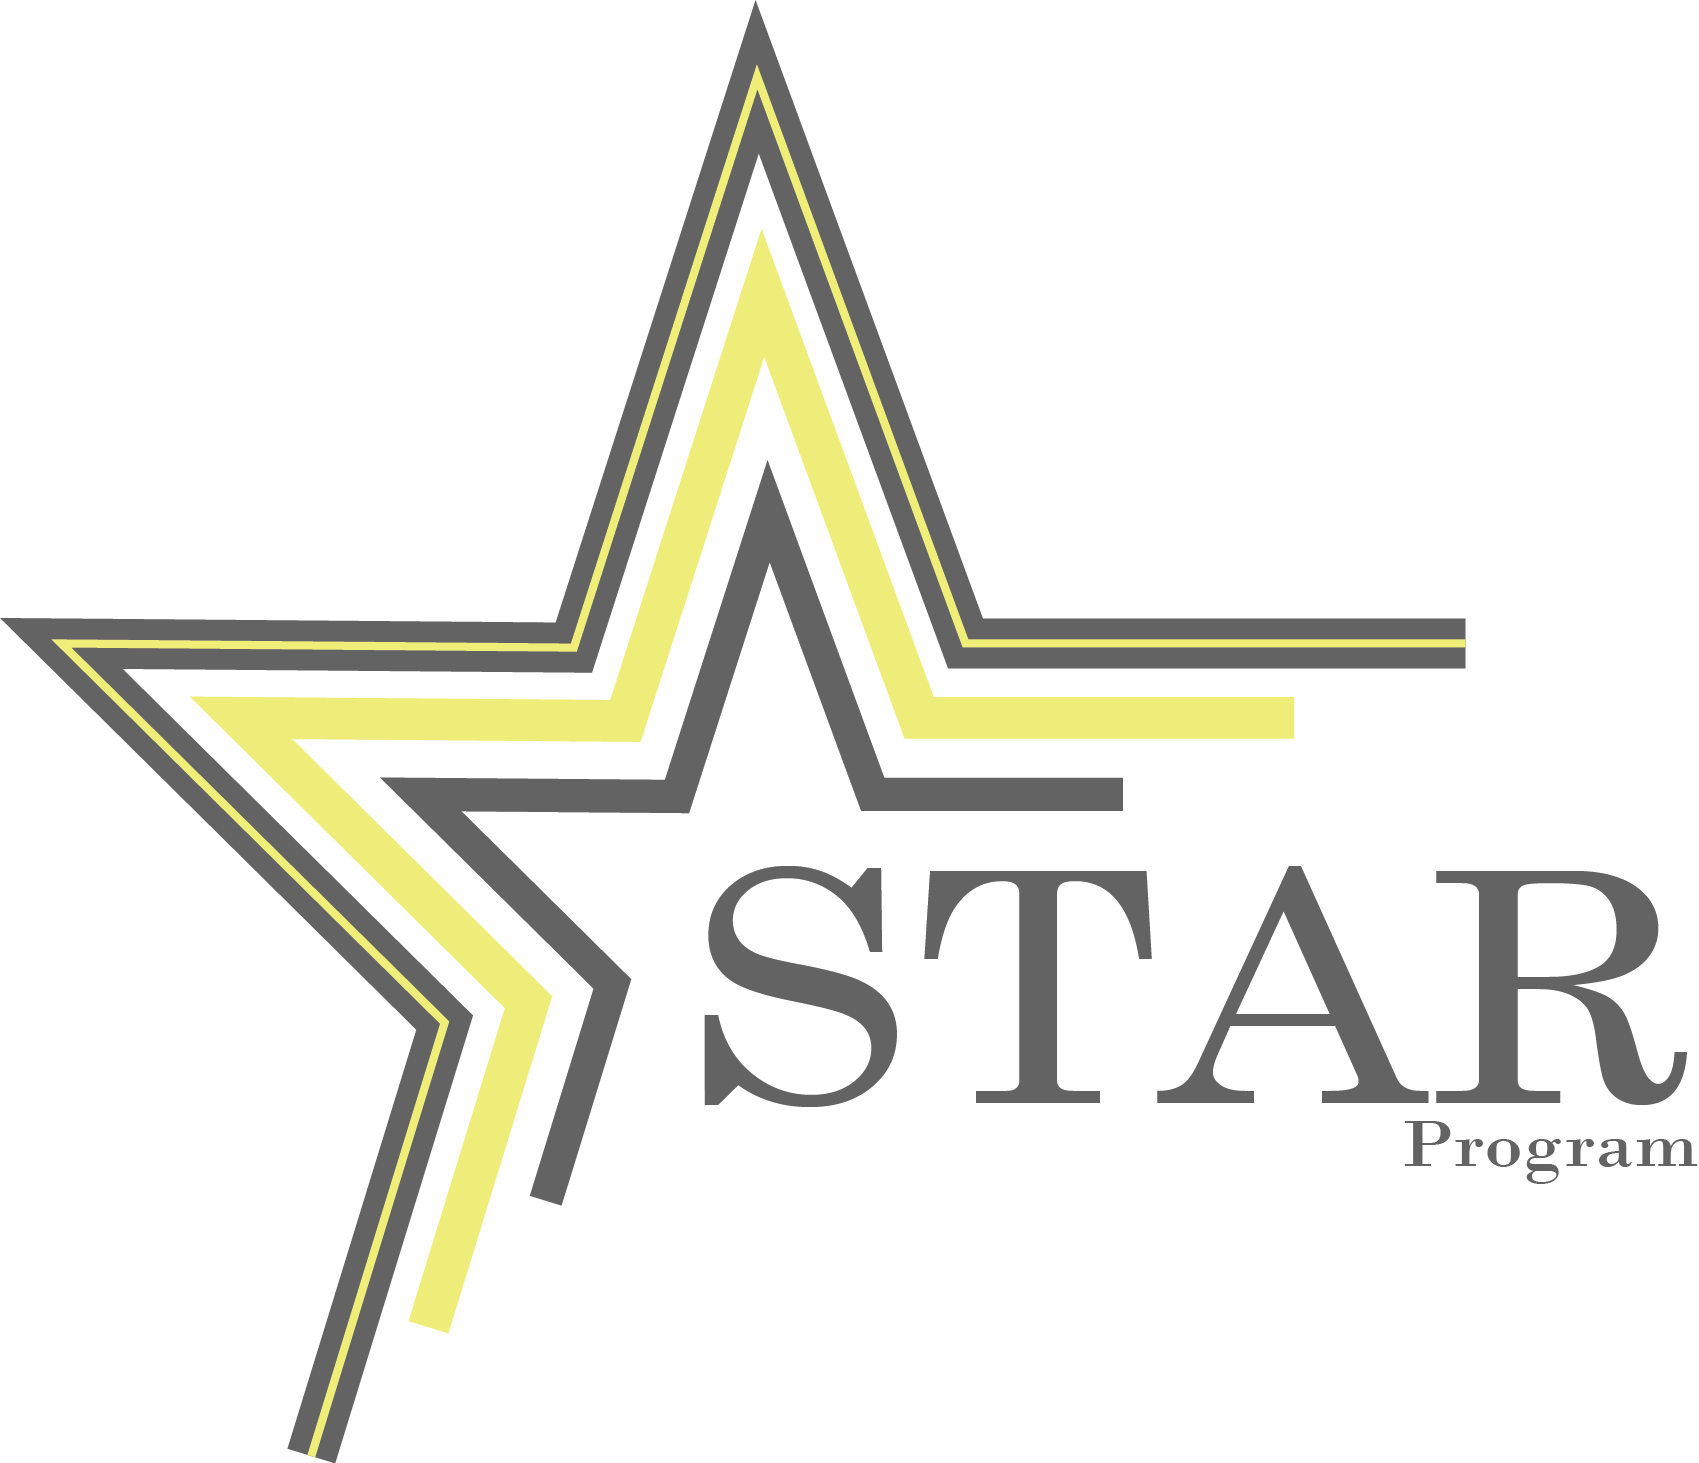 Star company. Star логотип. Логотипы компаний со звездами. Знаменитости логотип. Компания звезда.